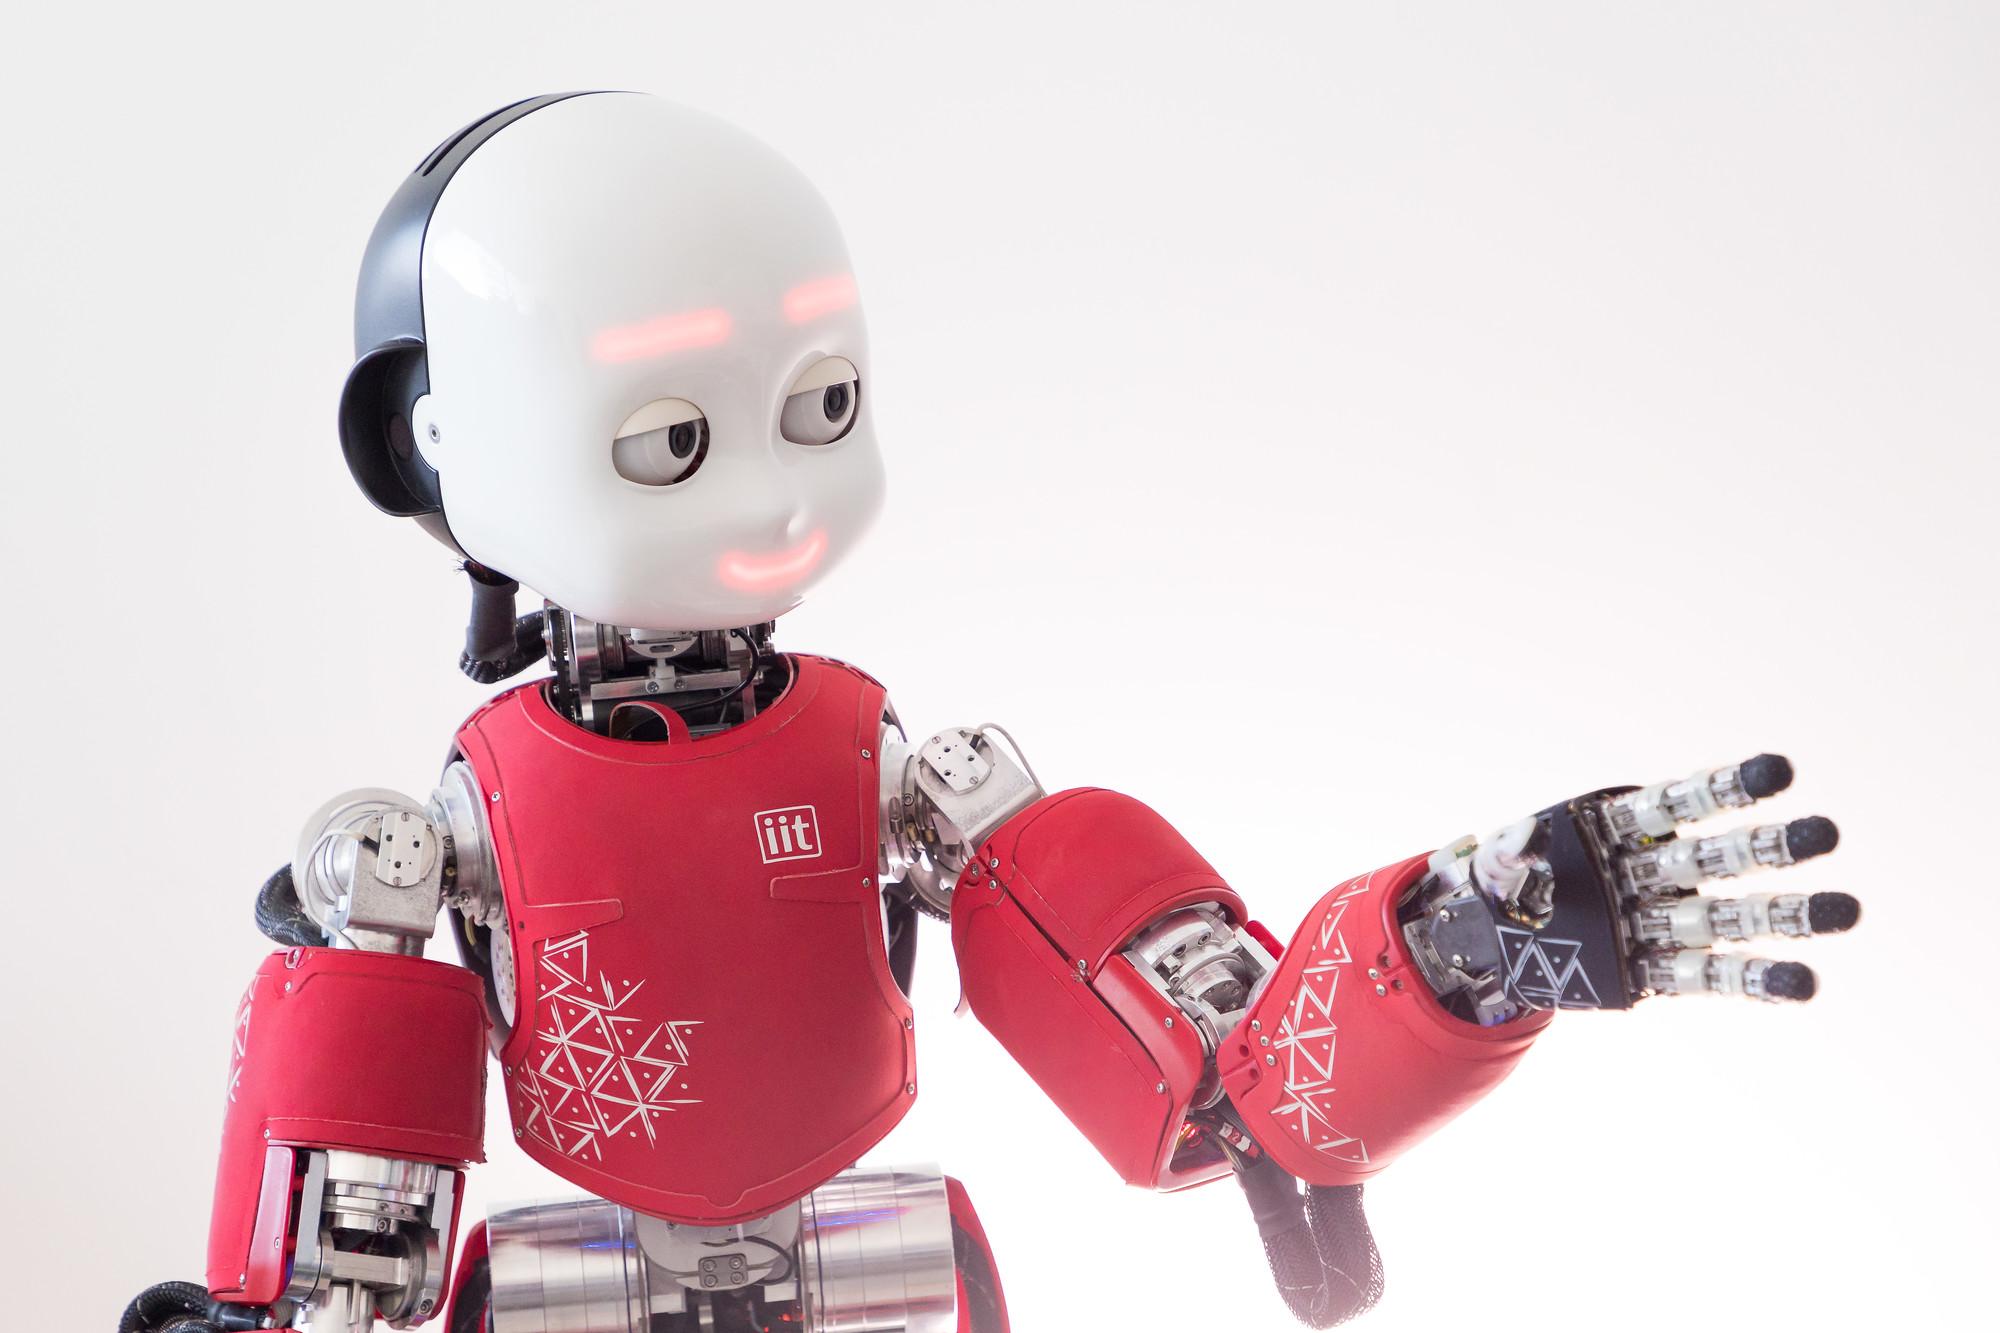 Cognitive robotics for human robot interaction